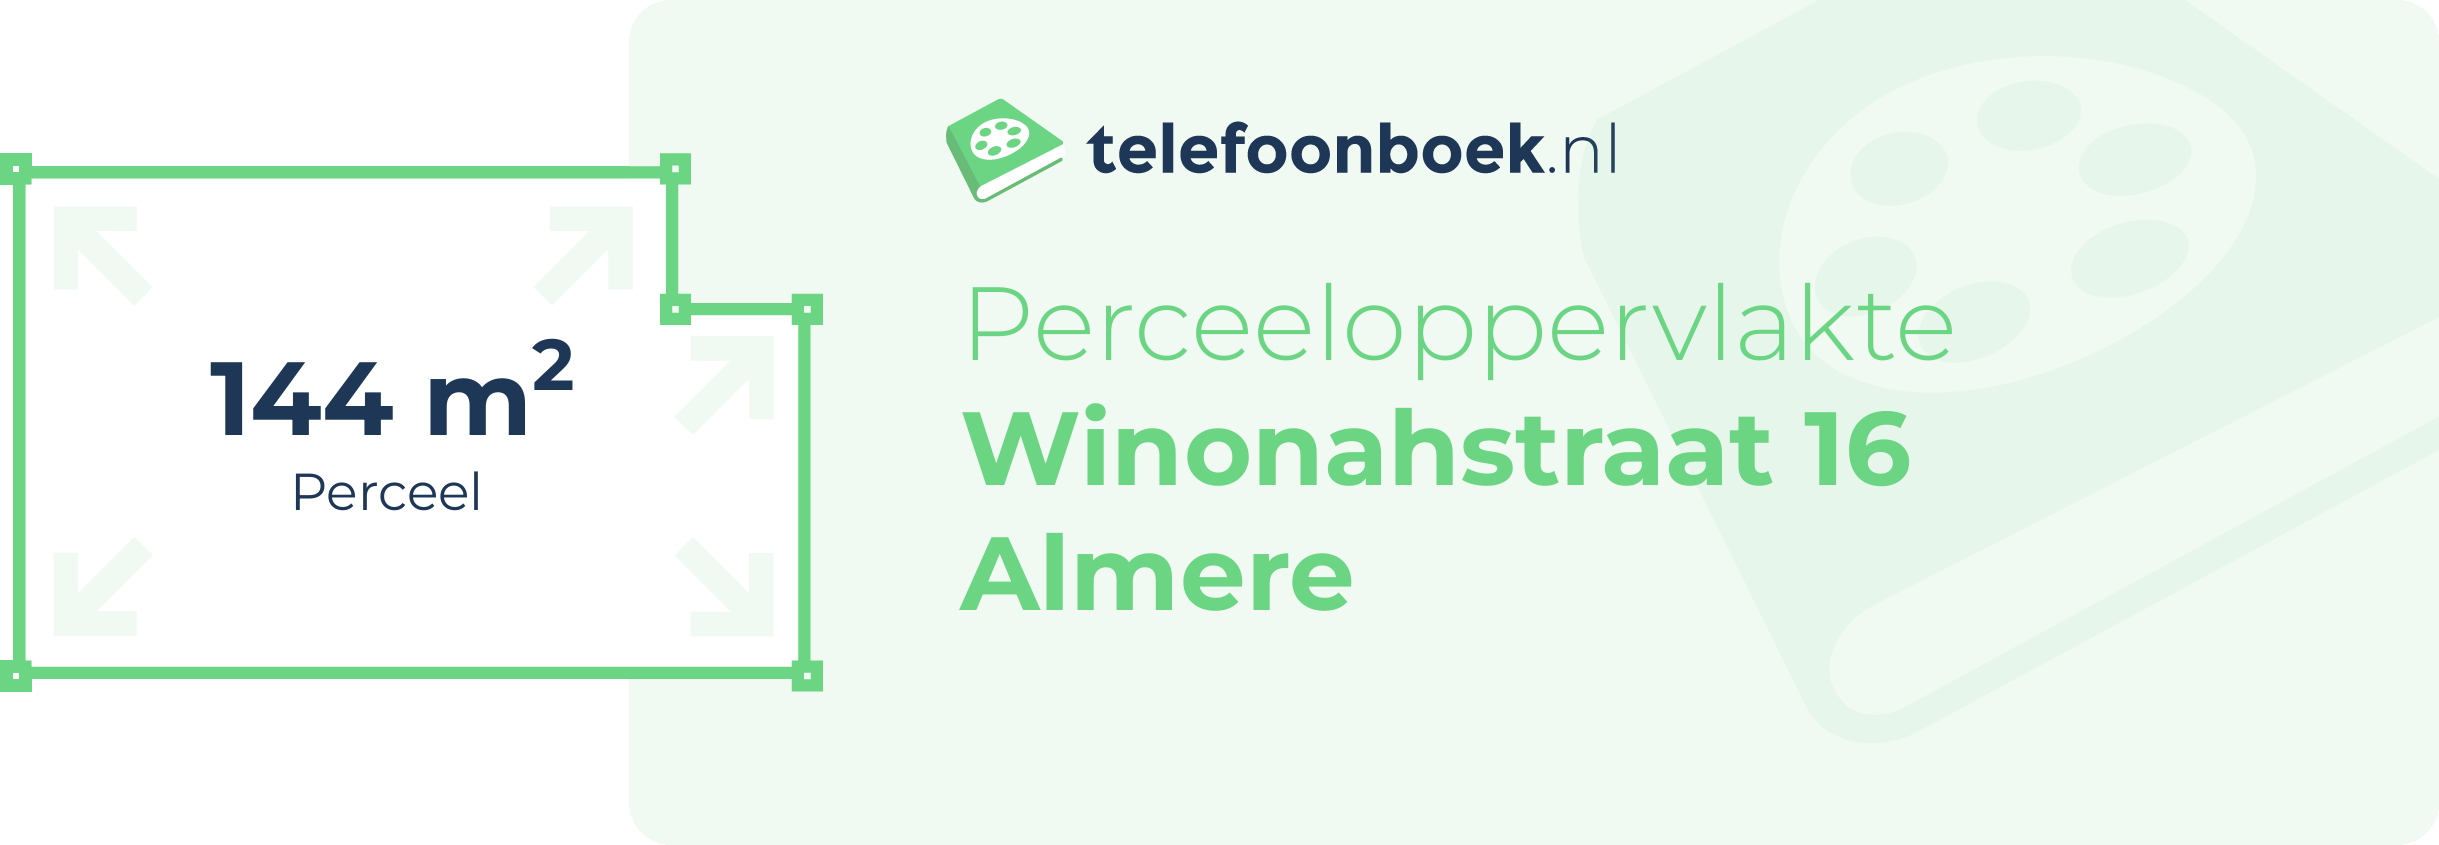 Perceeloppervlakte Winonahstraat 16 Almere